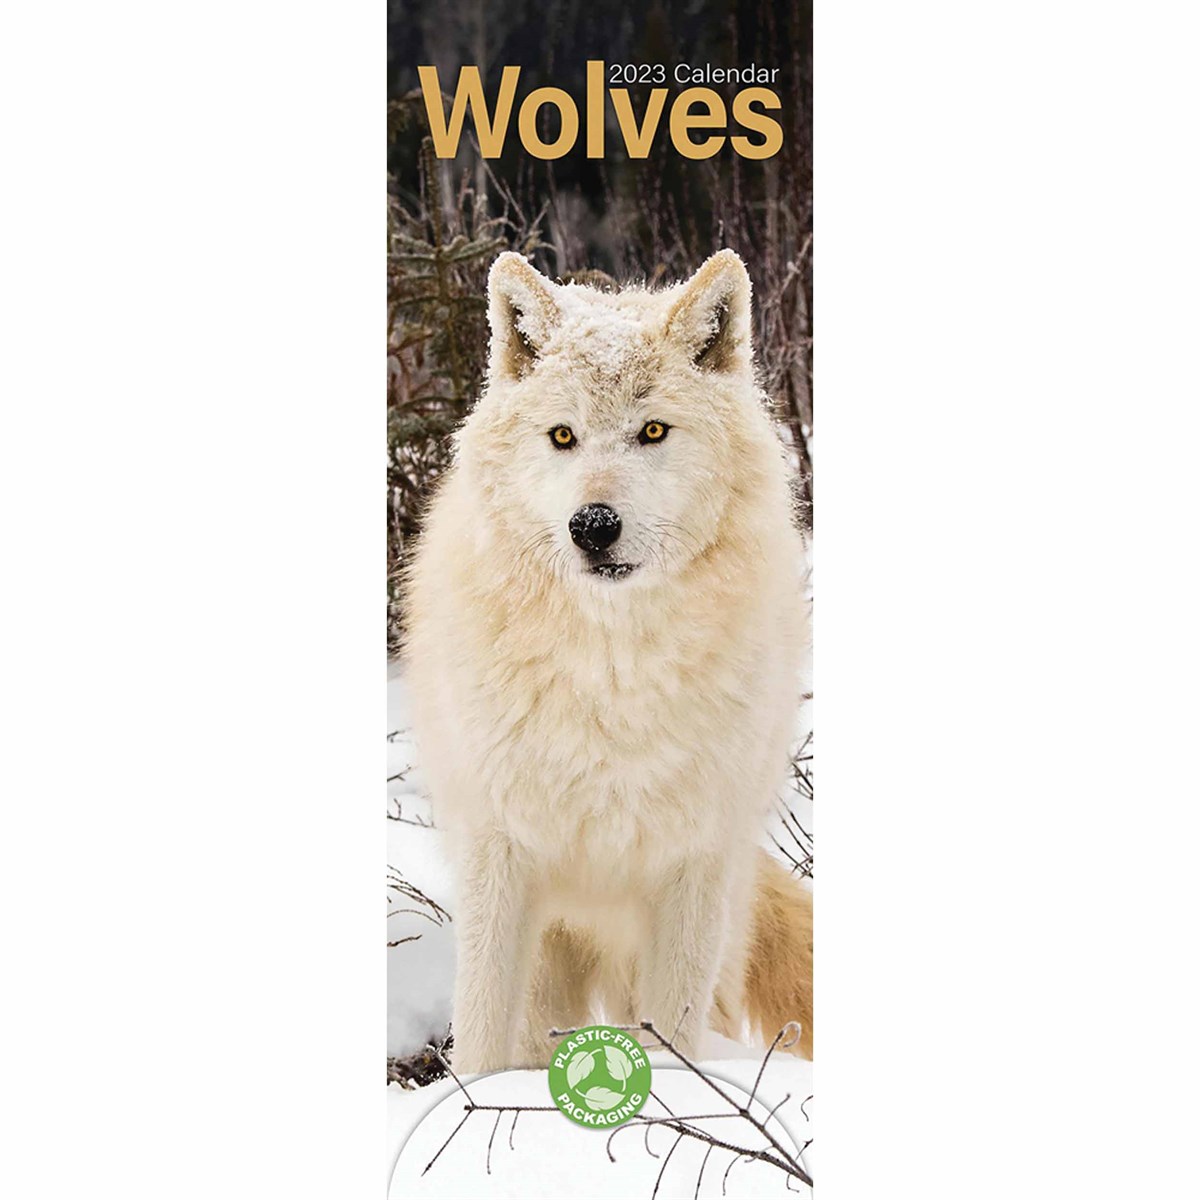 Wolves Slim 2023 Calendars